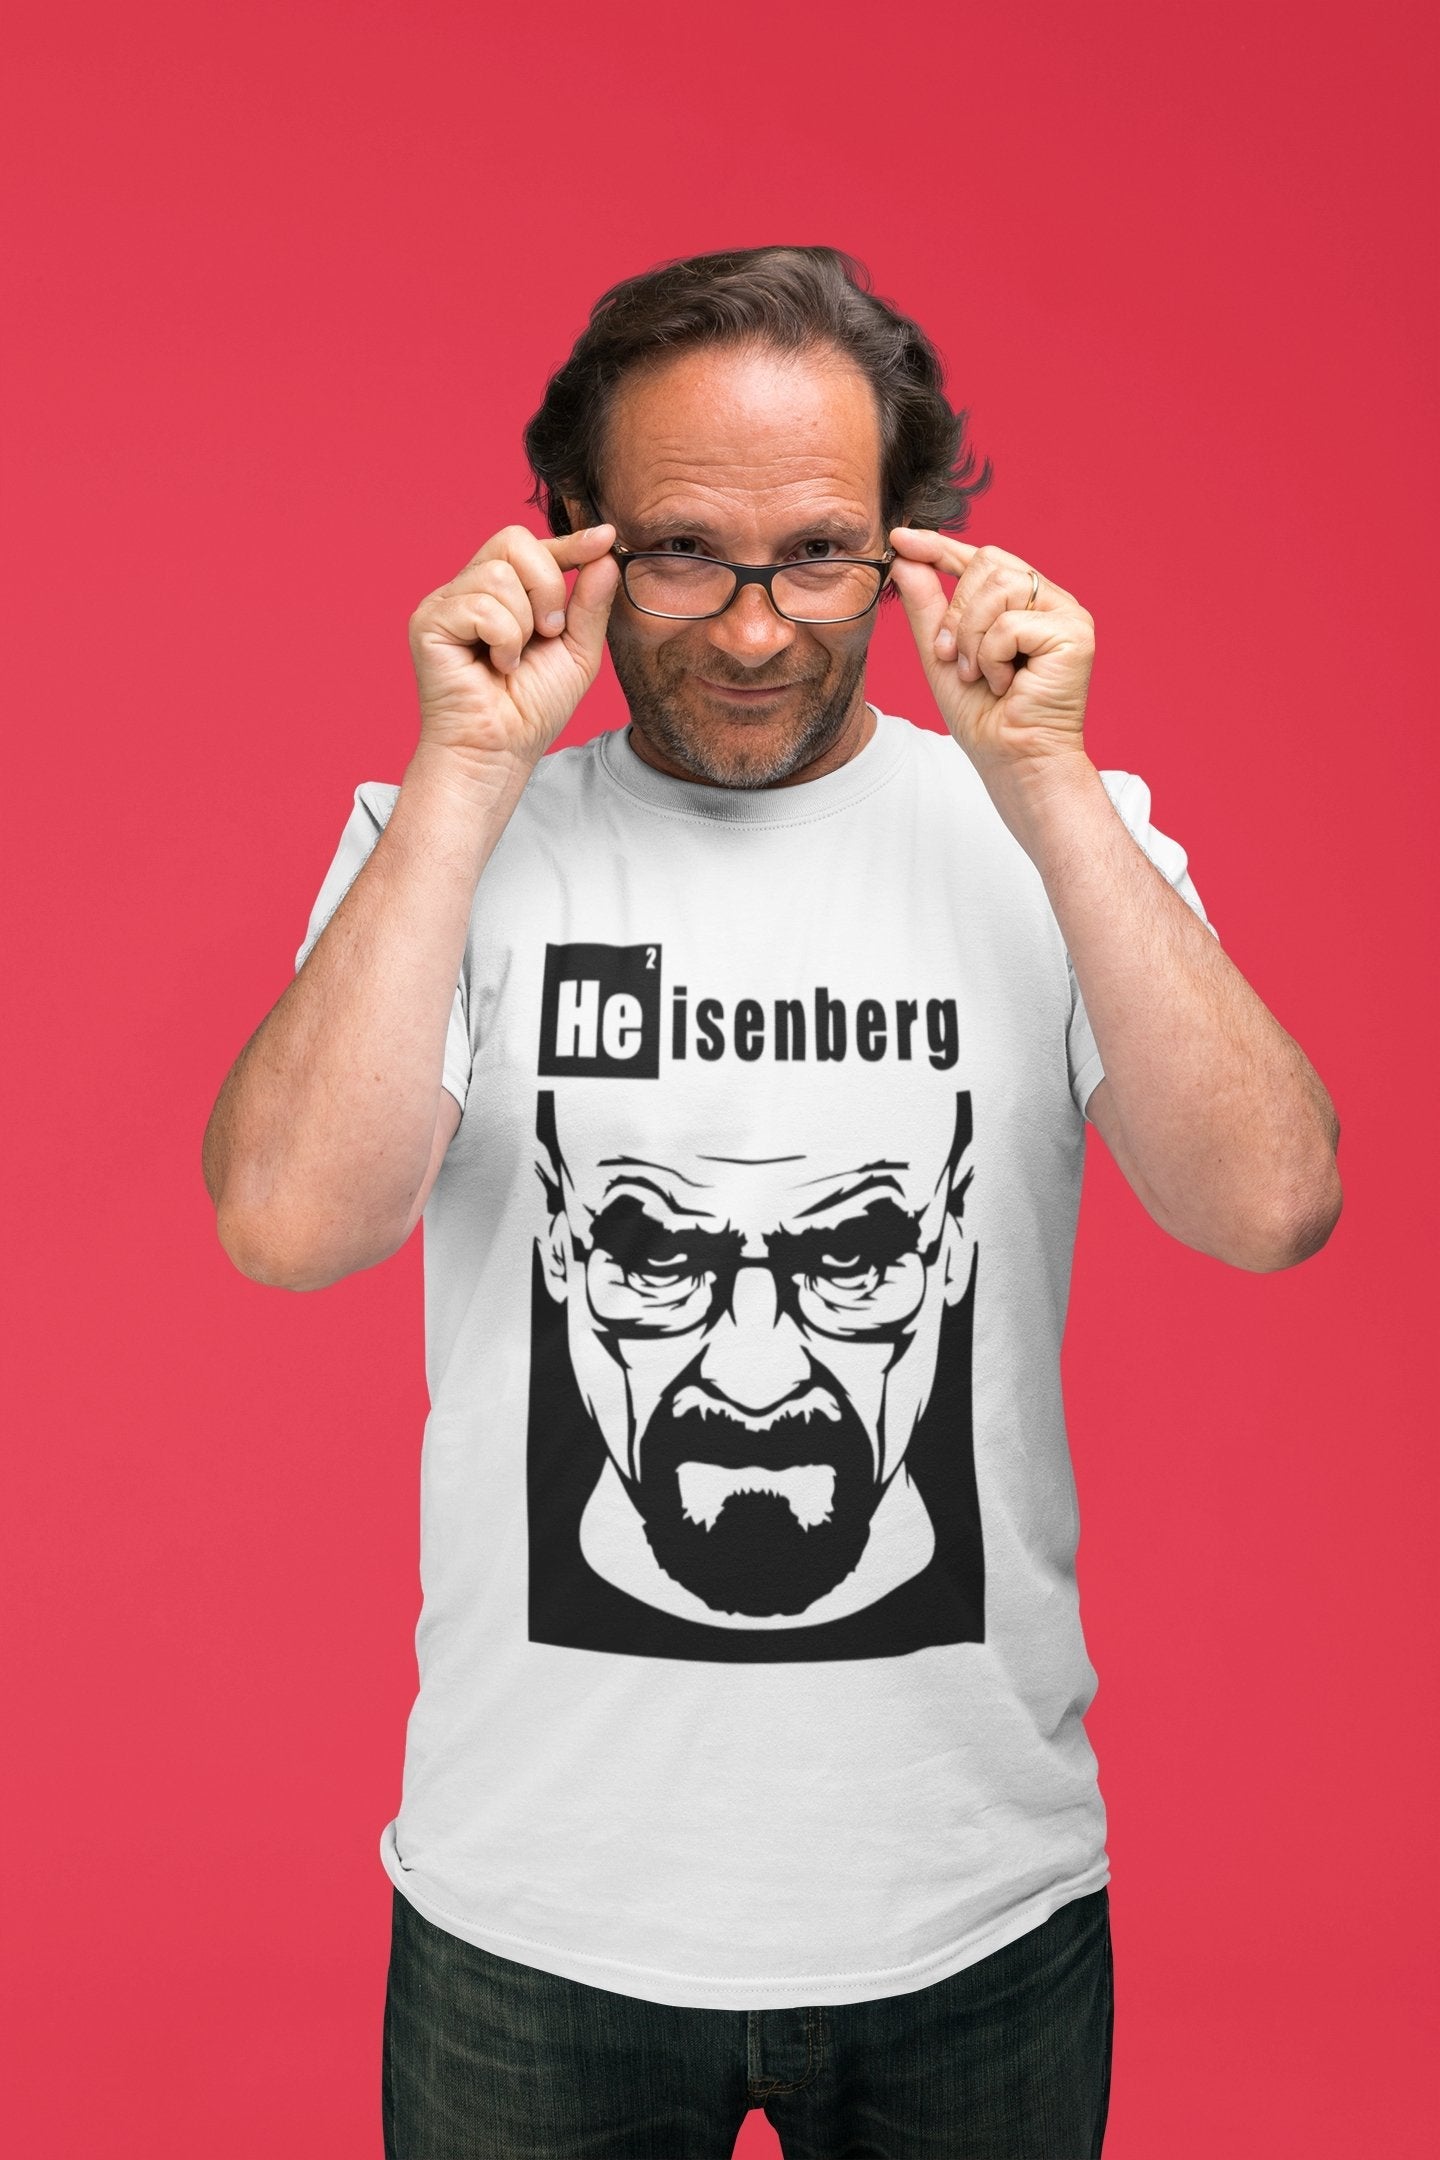 Heisenberg - A Breaking Bad T-shirt - Insane Tees